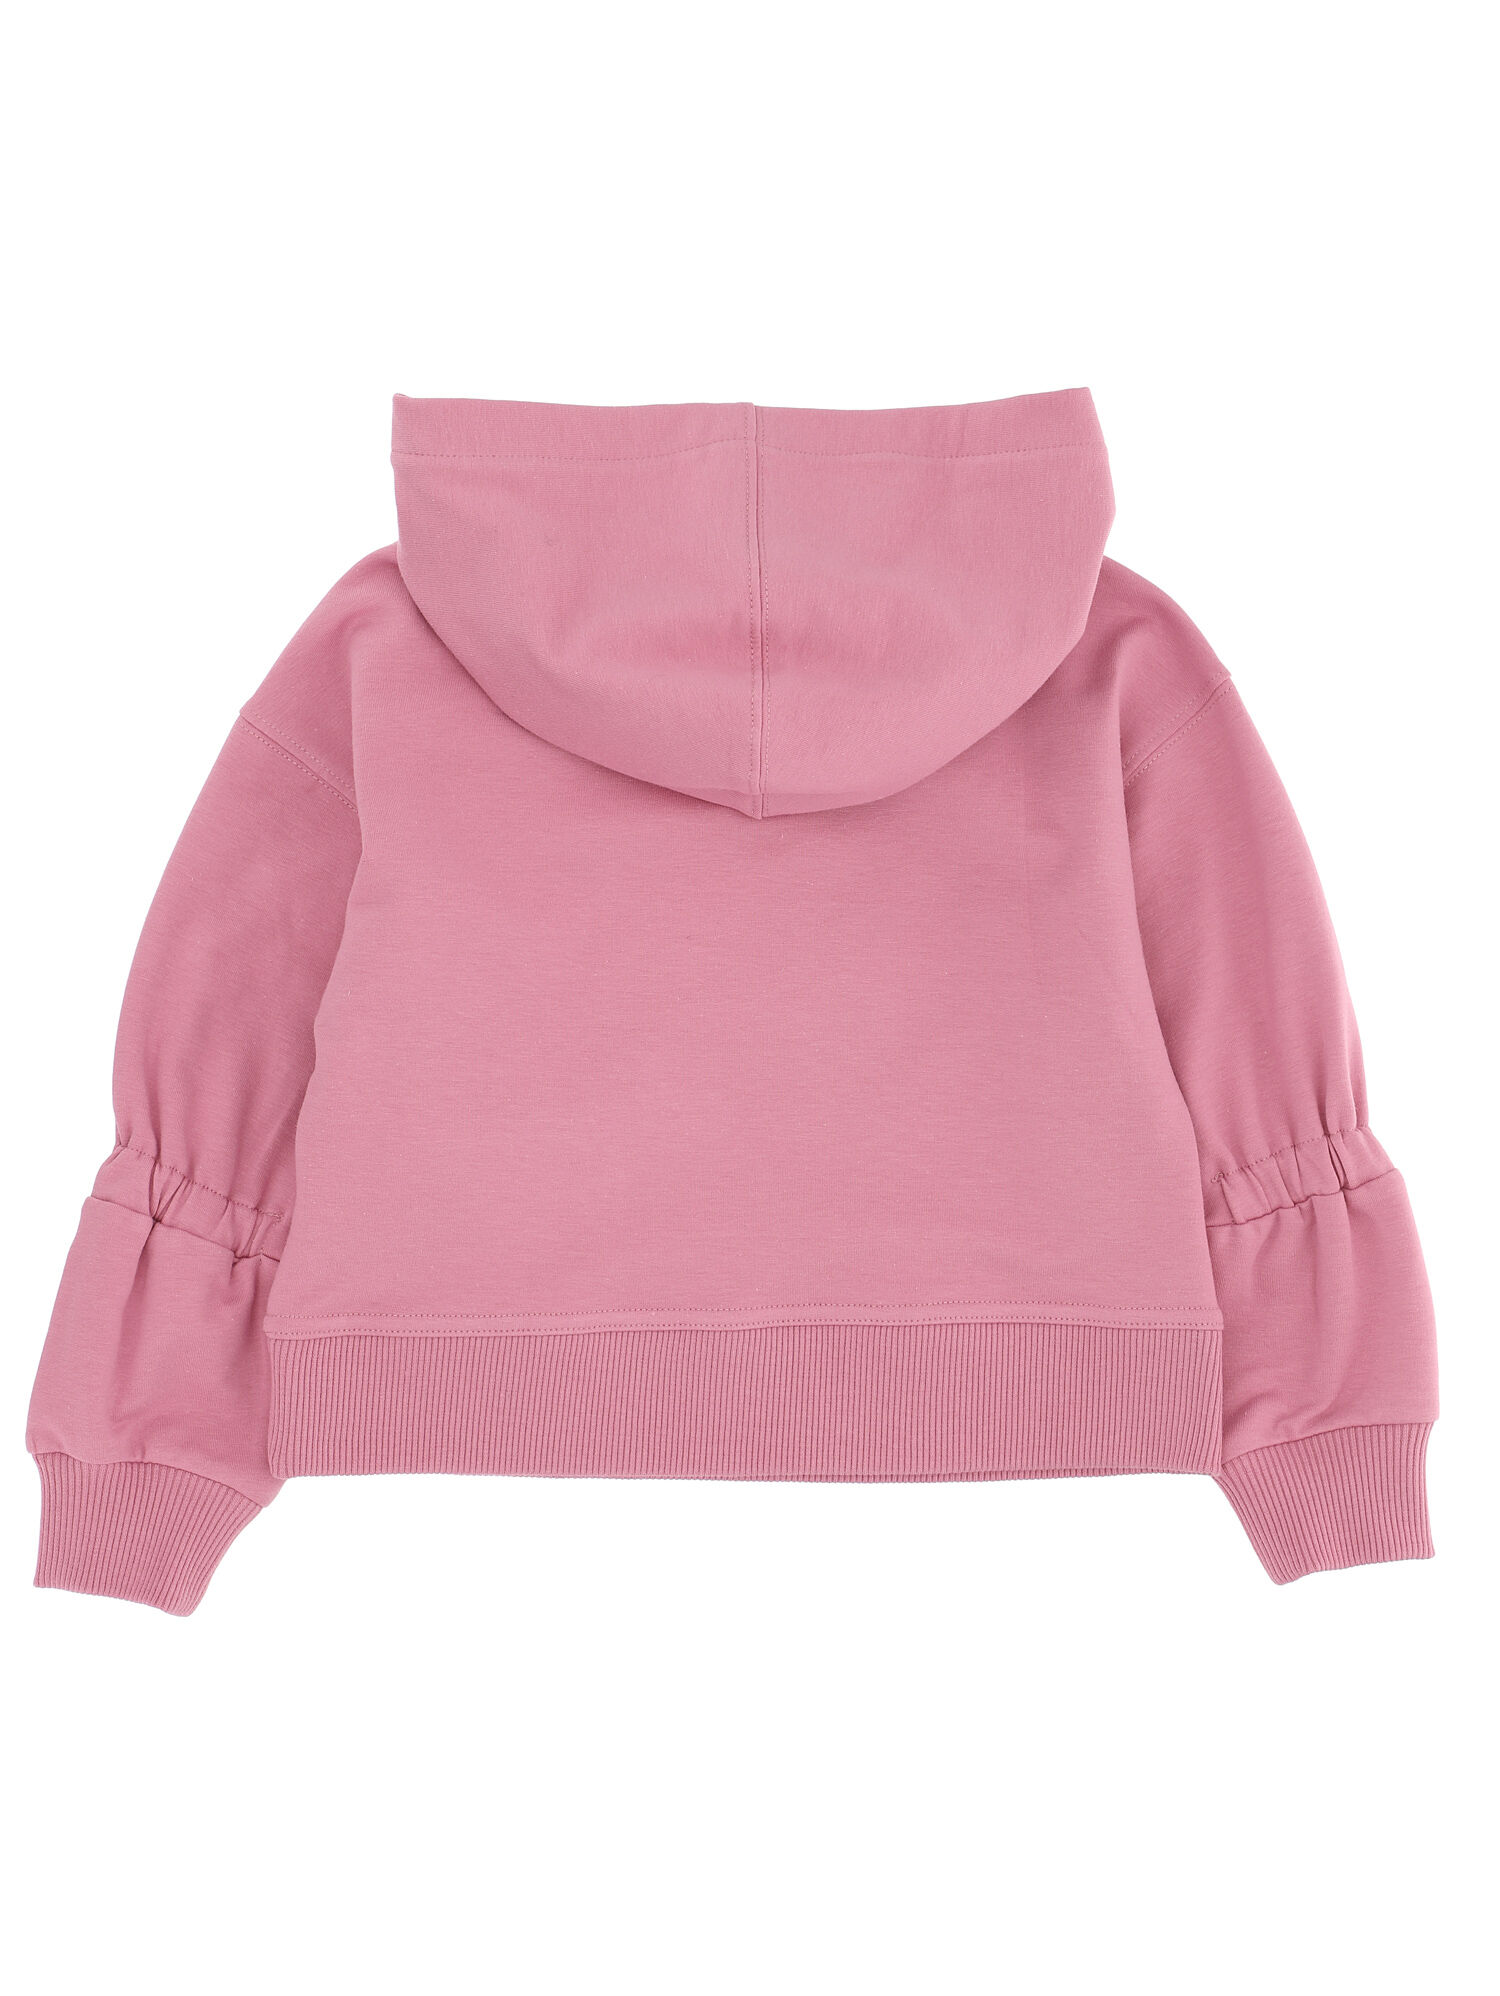 Zip-up sweatshirt with Born to be cool print Monnalisa Girls Clothing Sweaters Hoodies 